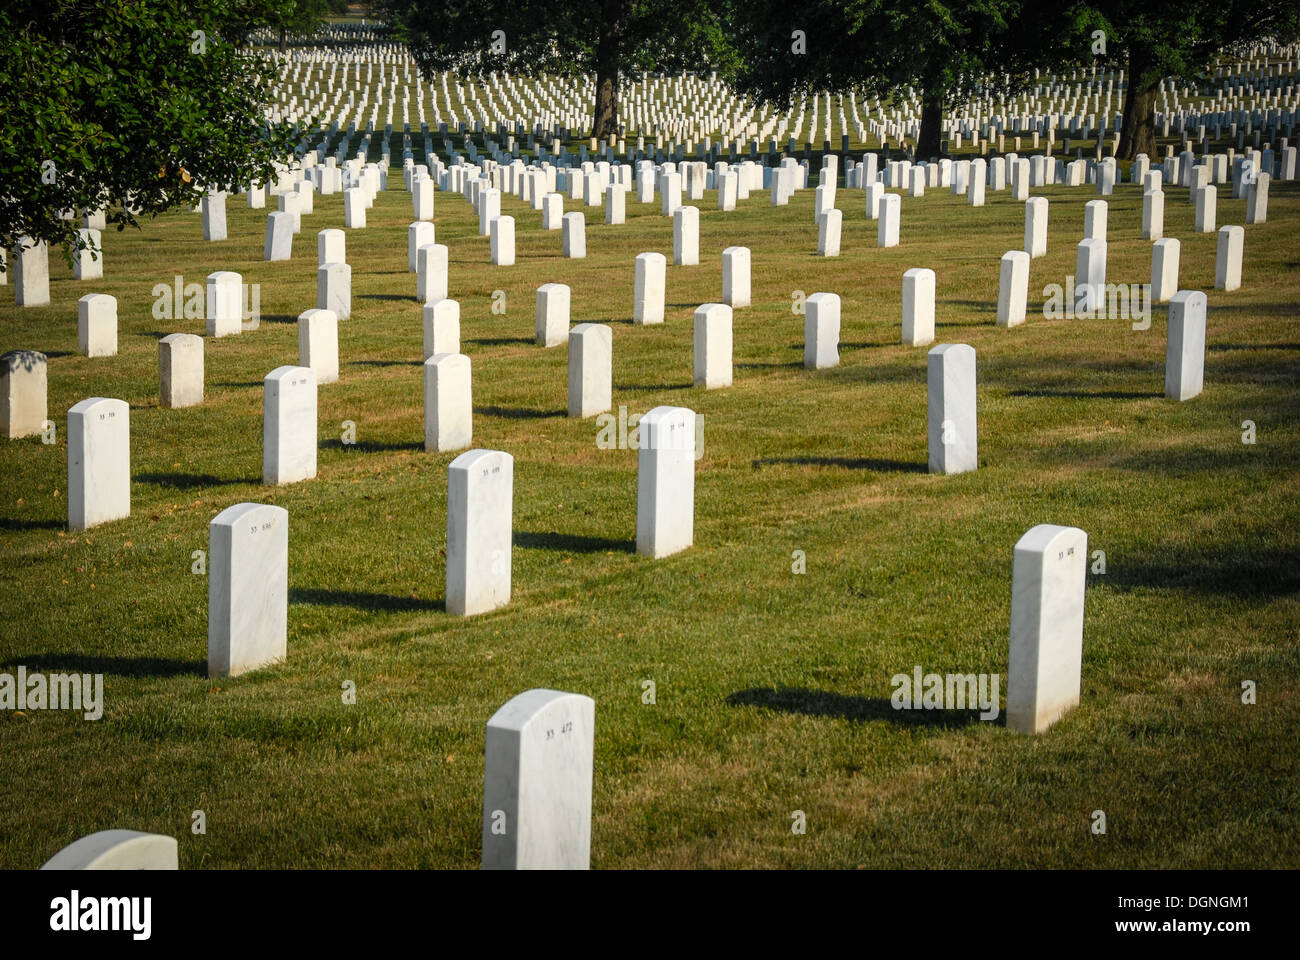 Arlington National Cemetery gravestones in Arlington, Virginia, across the Potomac River from Washington, D.C. (USA) Stock Photo